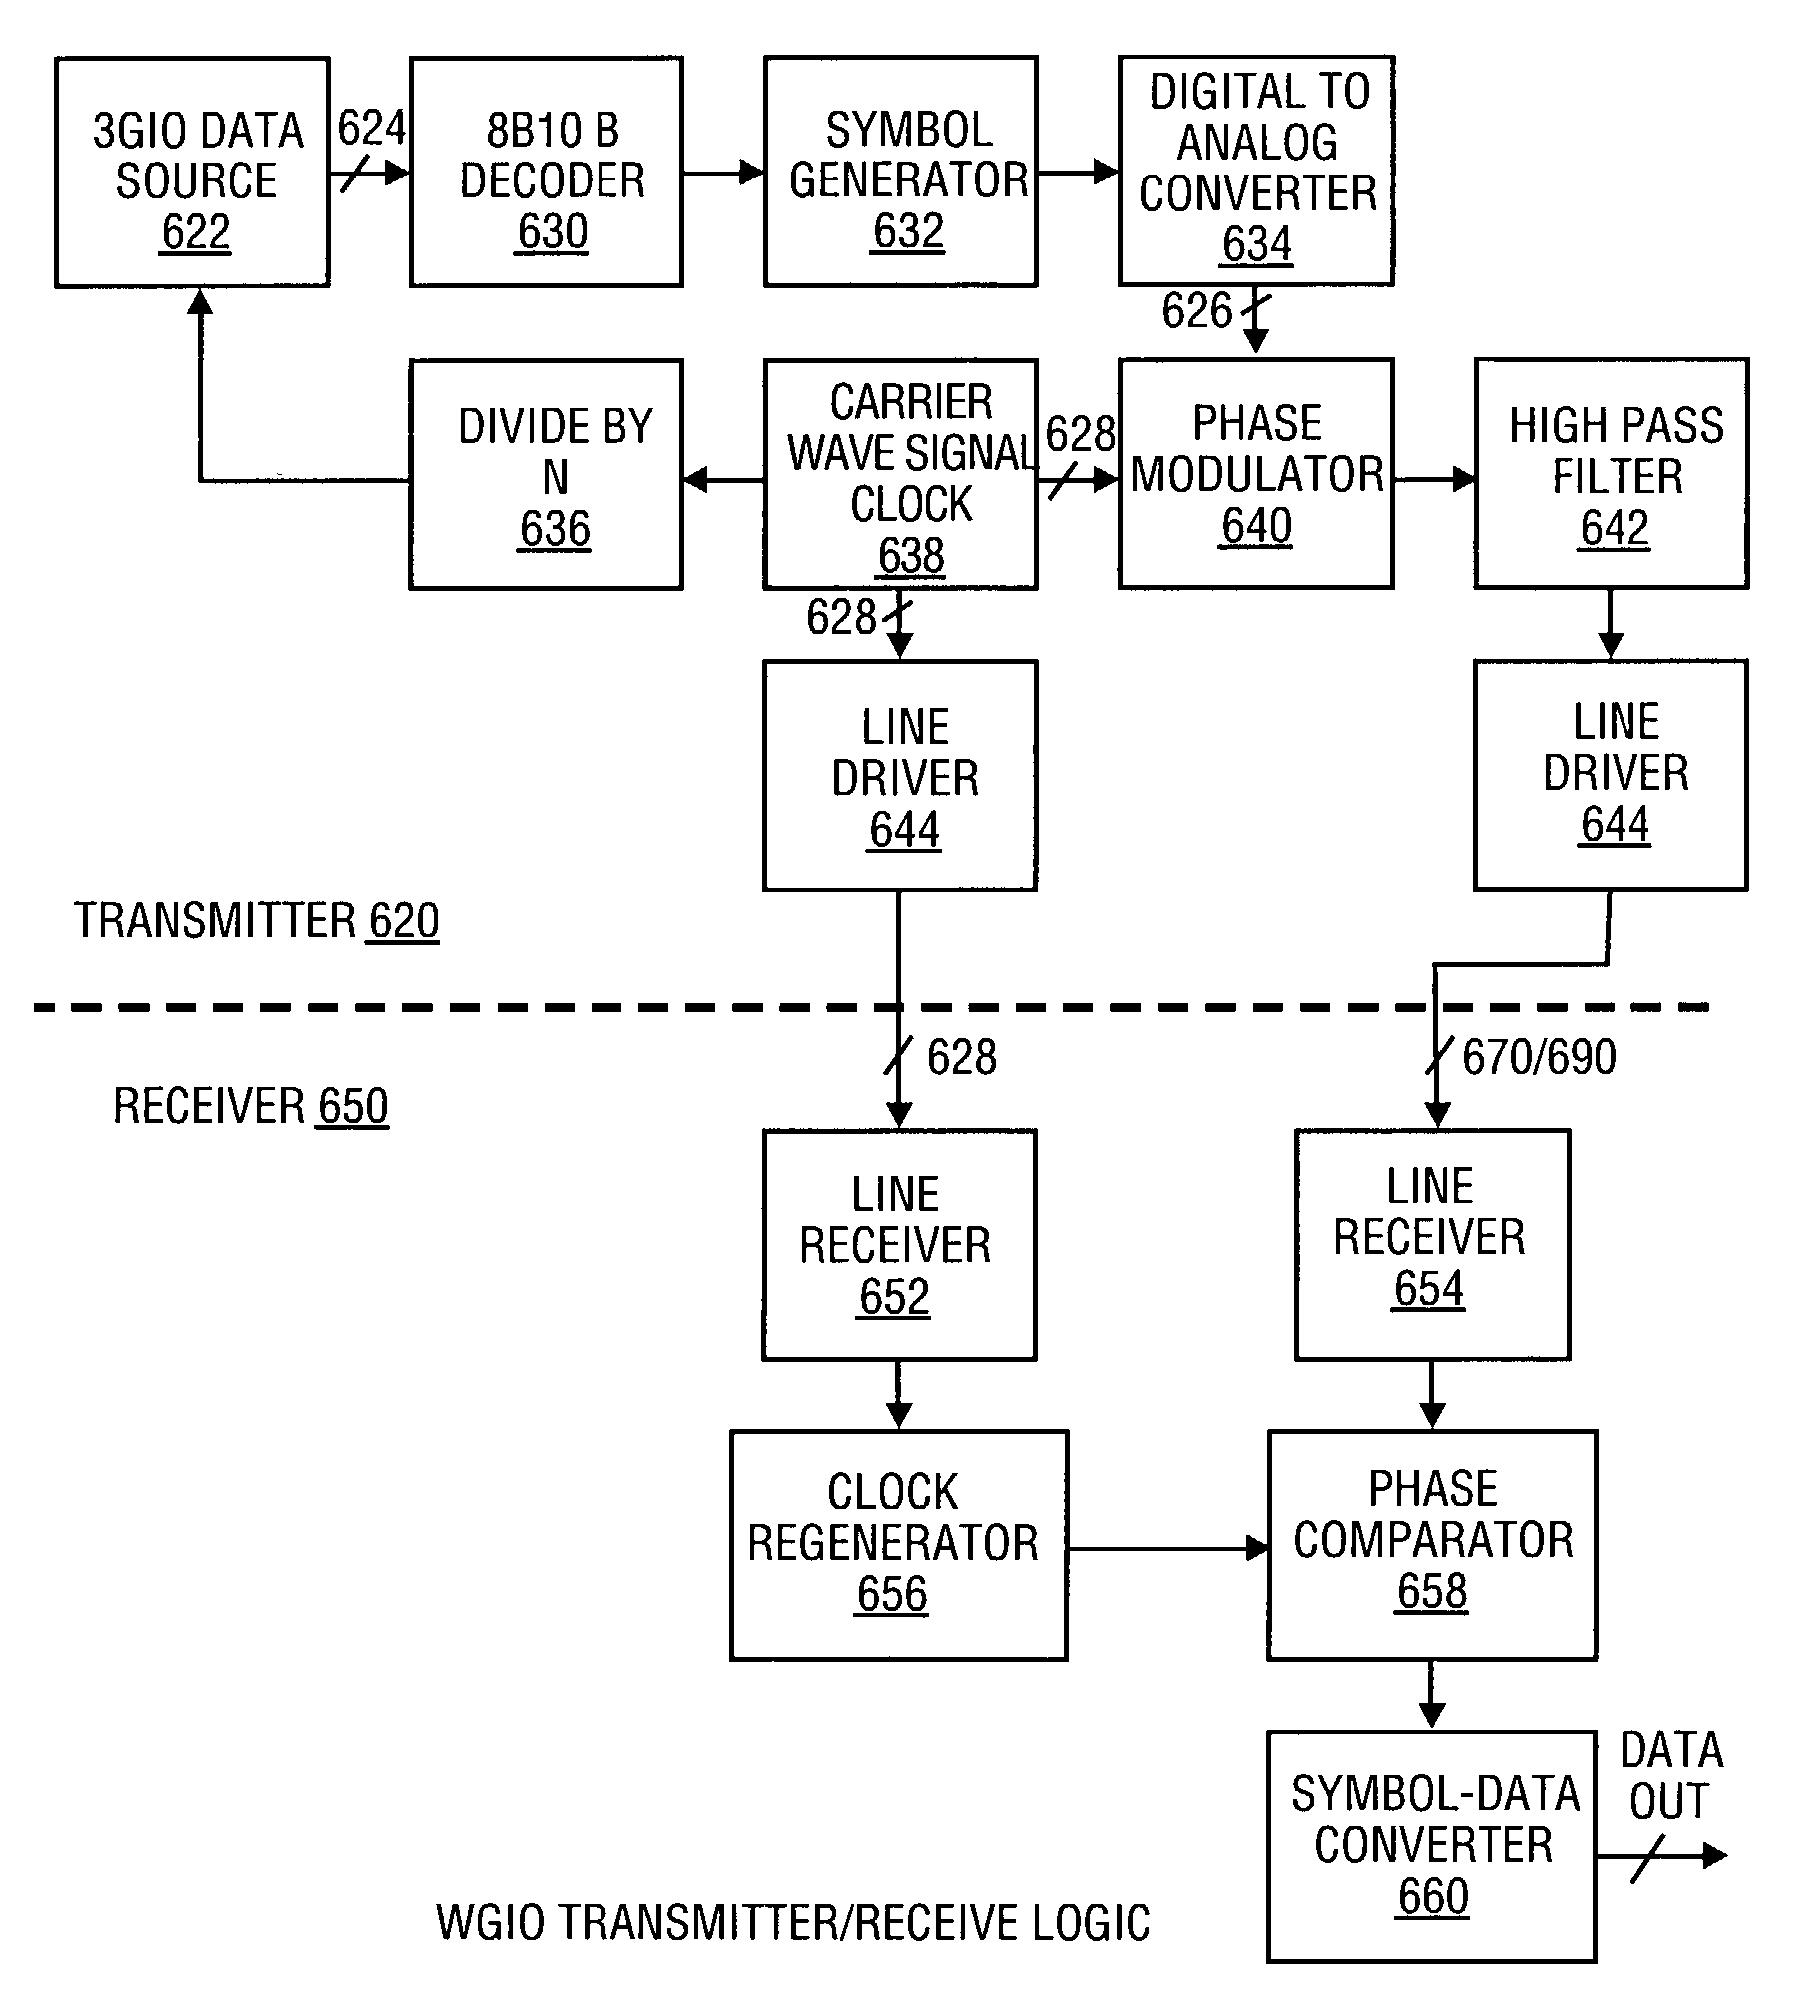 Apparatus and method for WGIO phase modulation